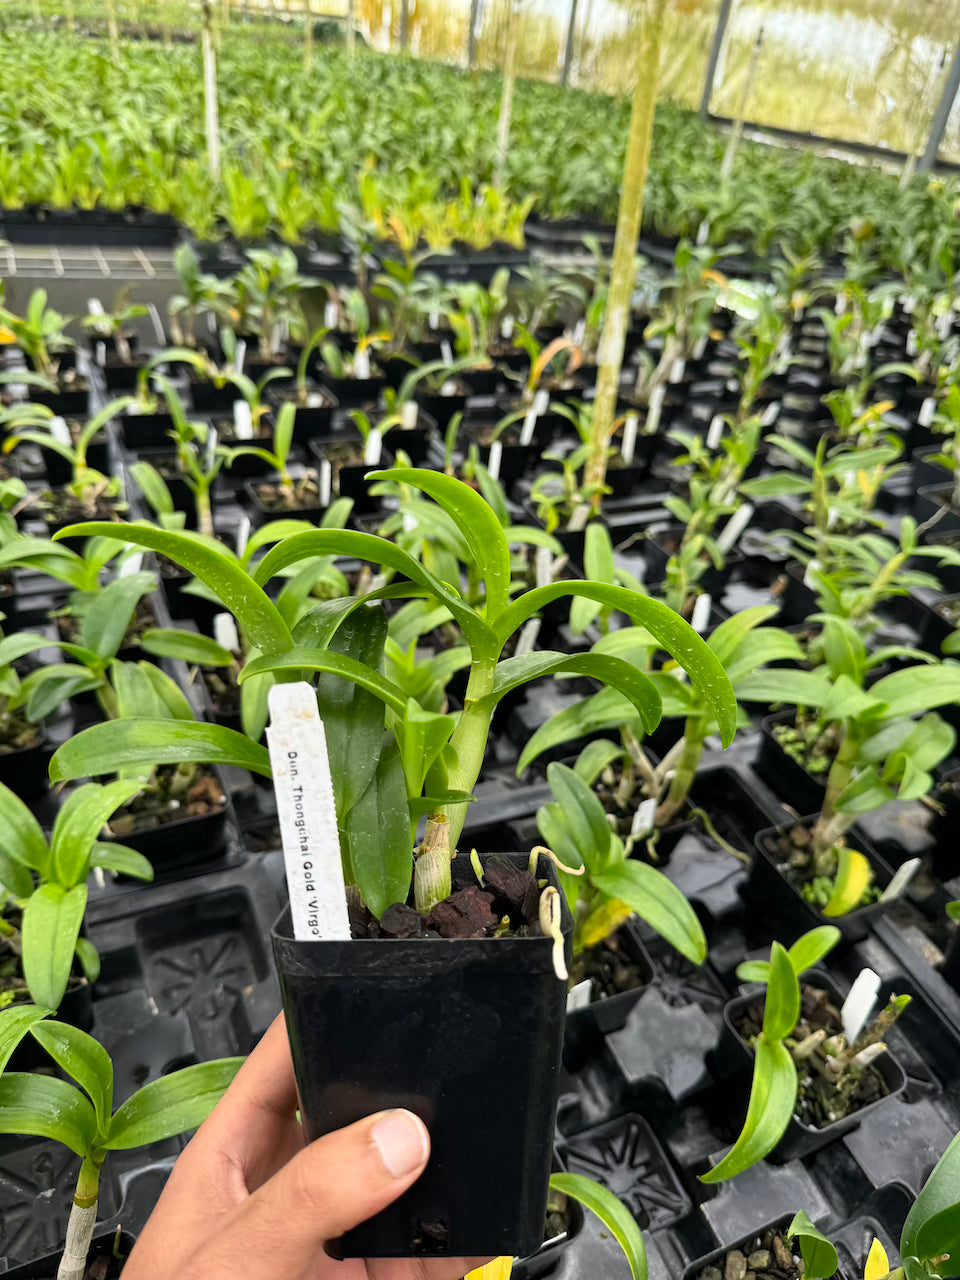 Dendrobium Thongchai Gold 'Viroj' Comes in 4" Pot